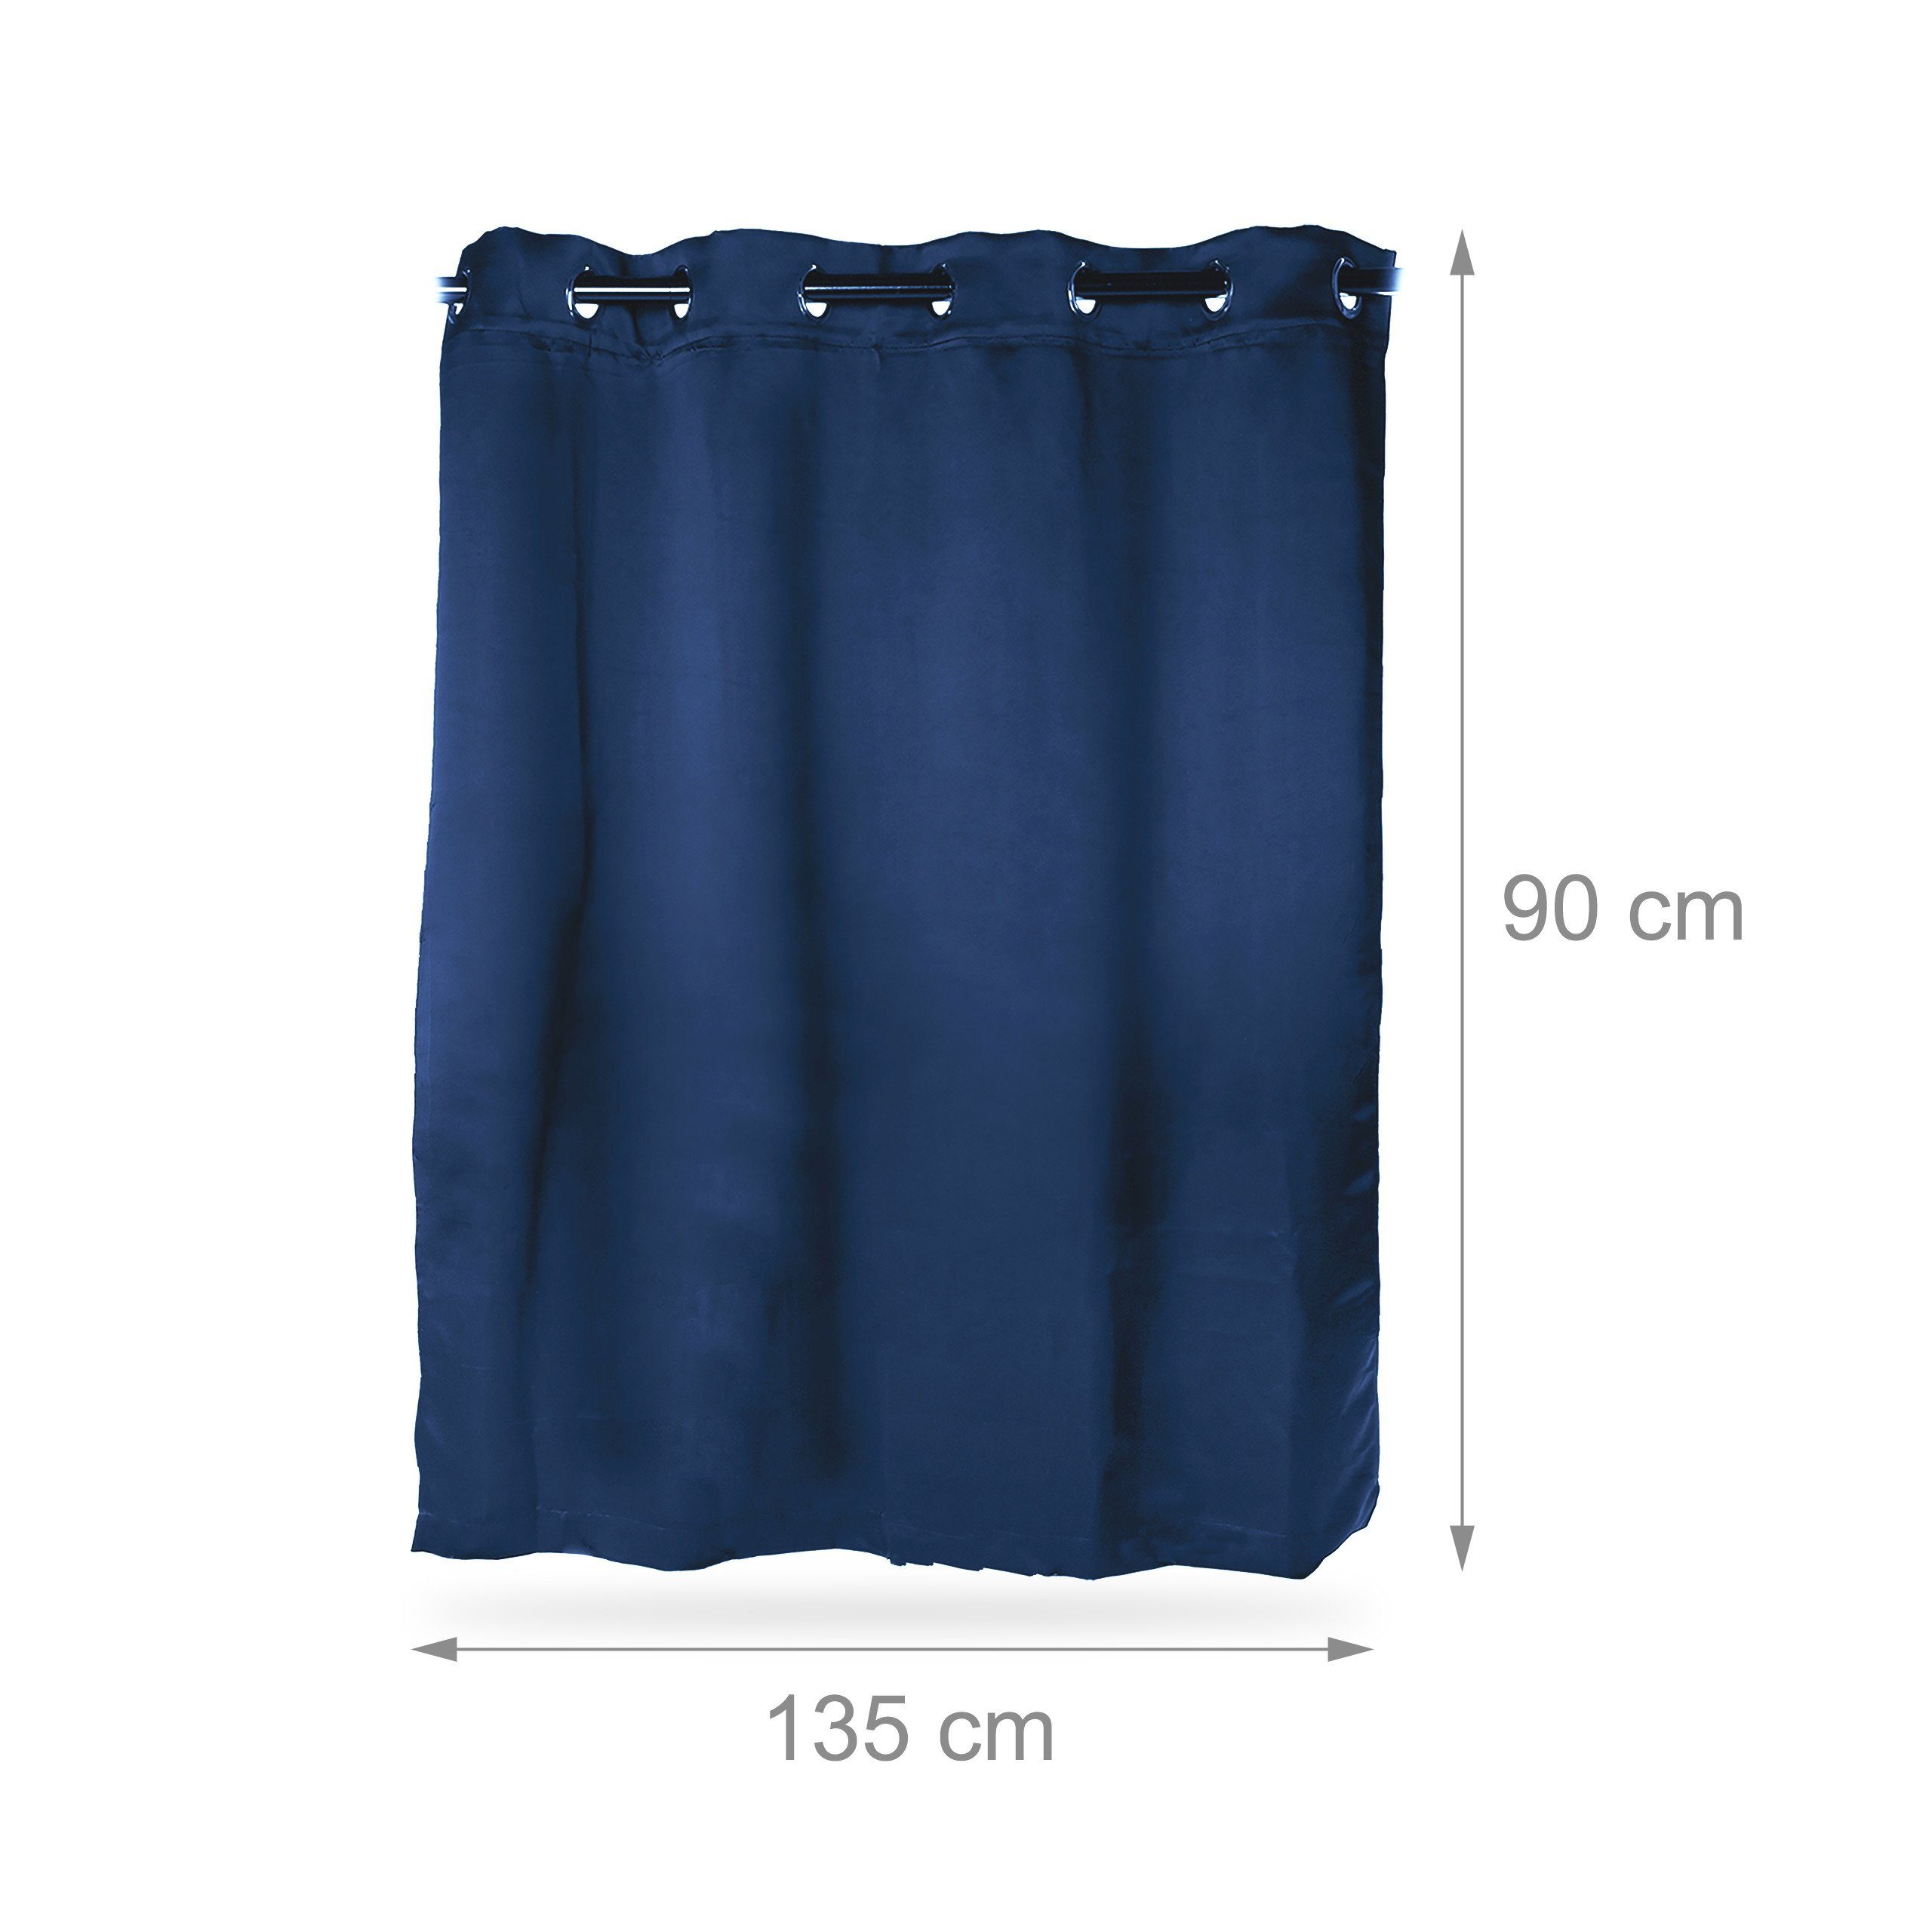 x x 135 blau cm, relaxdays Vorhang Vorhang 90 6